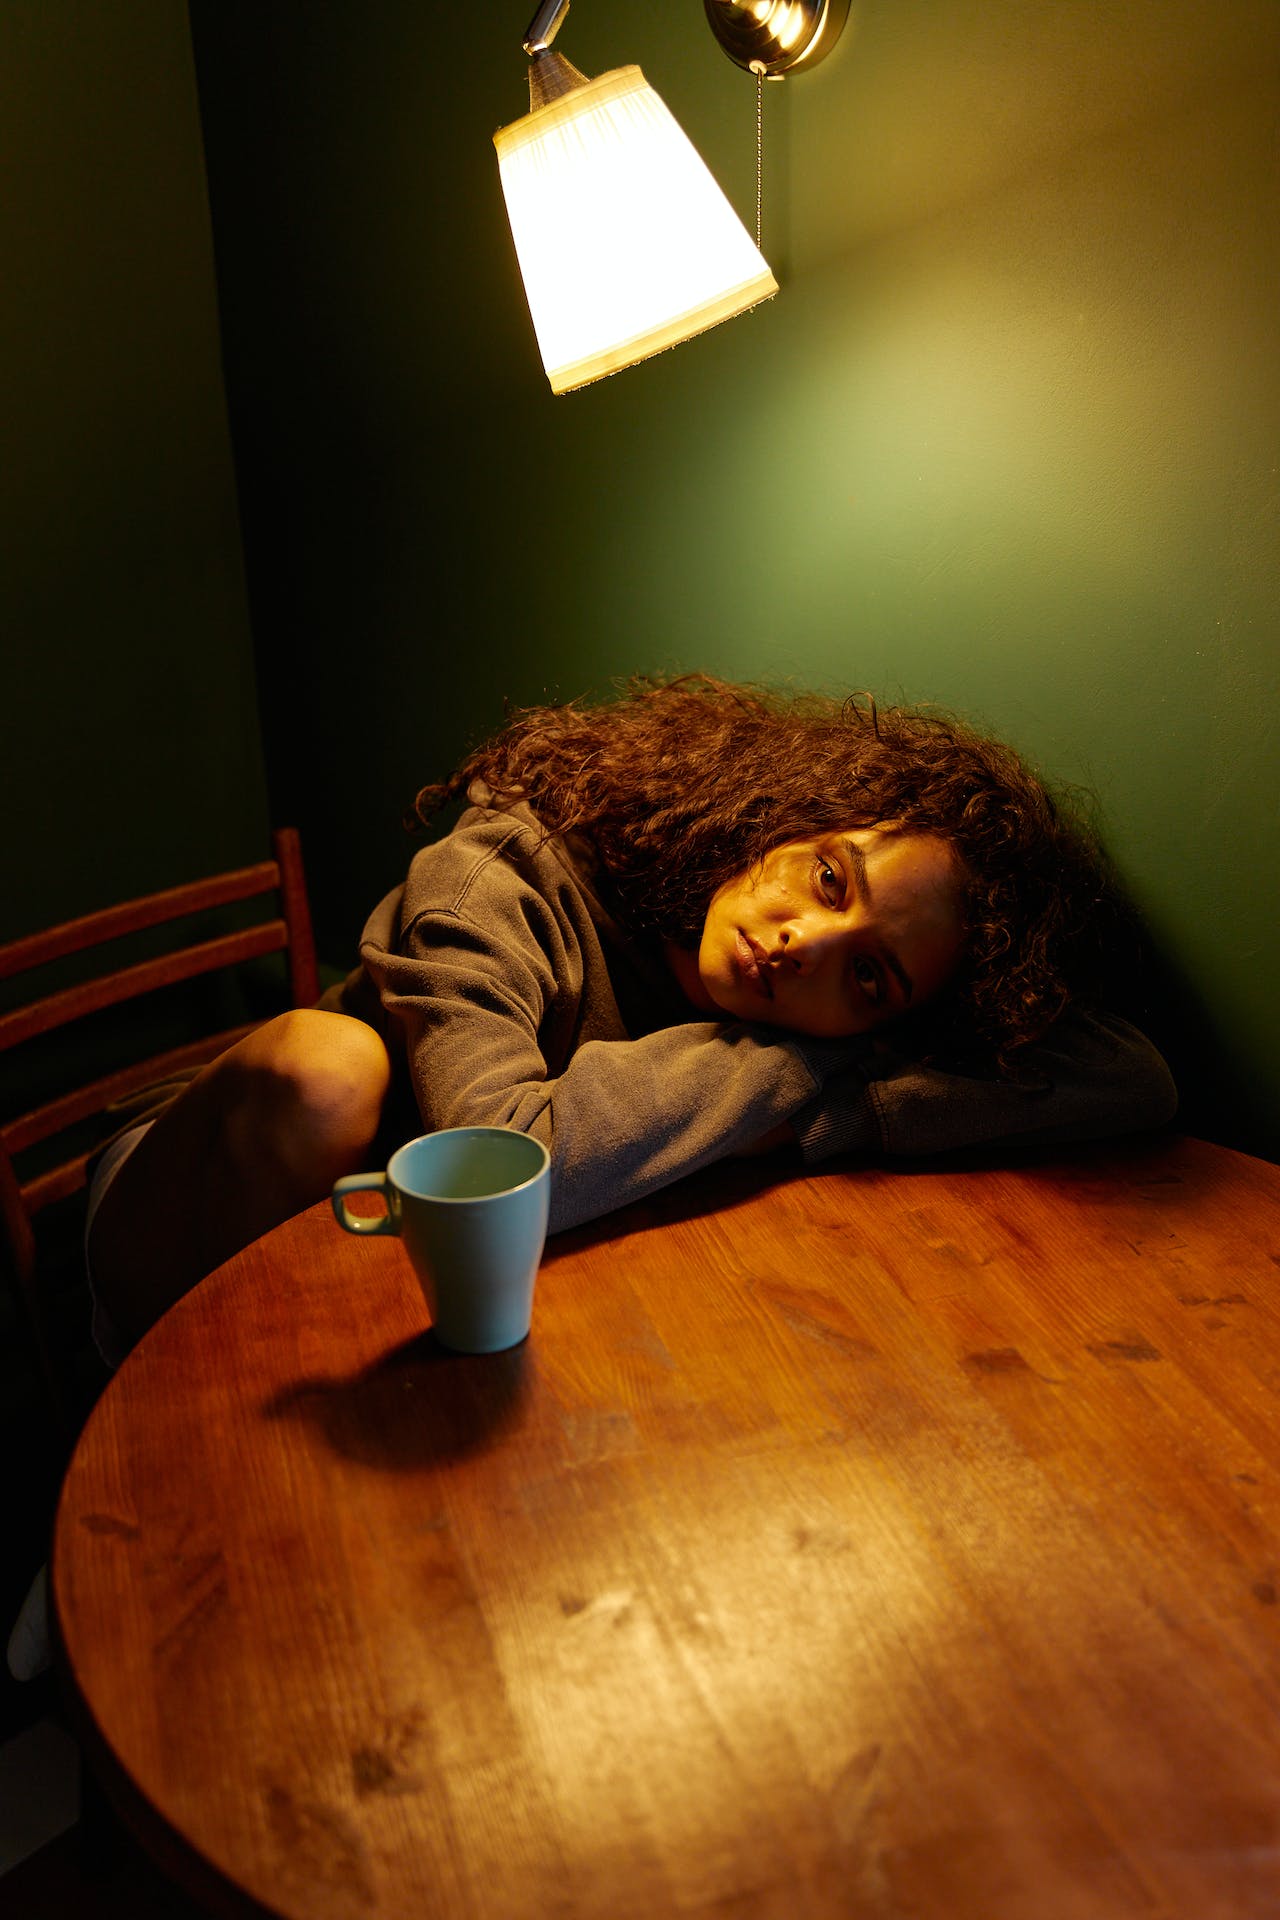 Photo by Darina Belonogova: https://www.pexels.com/photo/a-woman-in-gray-sweater-lying-her-head-on-a-wooden-table-7208998/